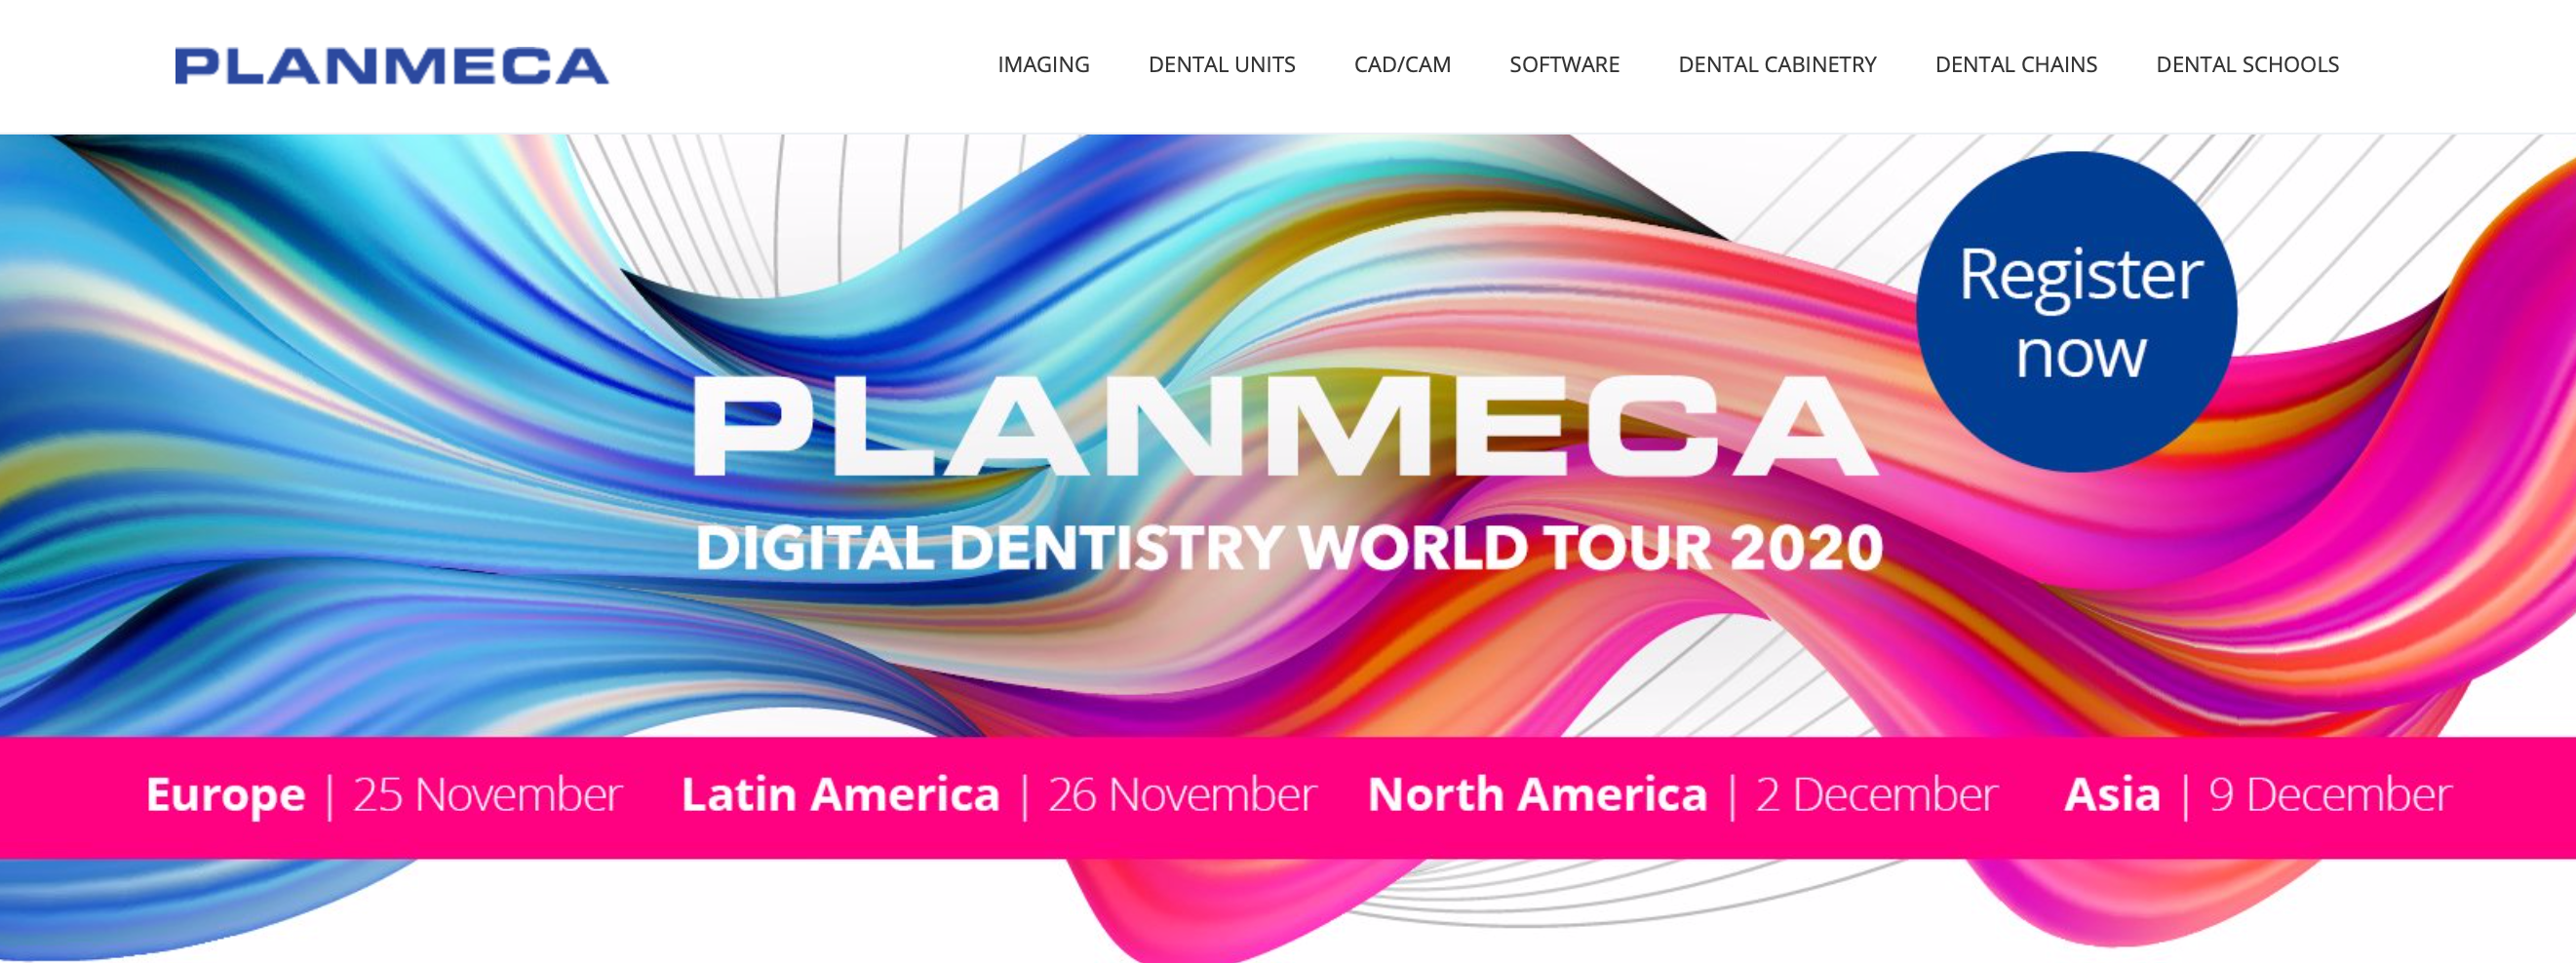 Planmeca Digital Dentistry World Tour Dec. 2 Event Going Virtual